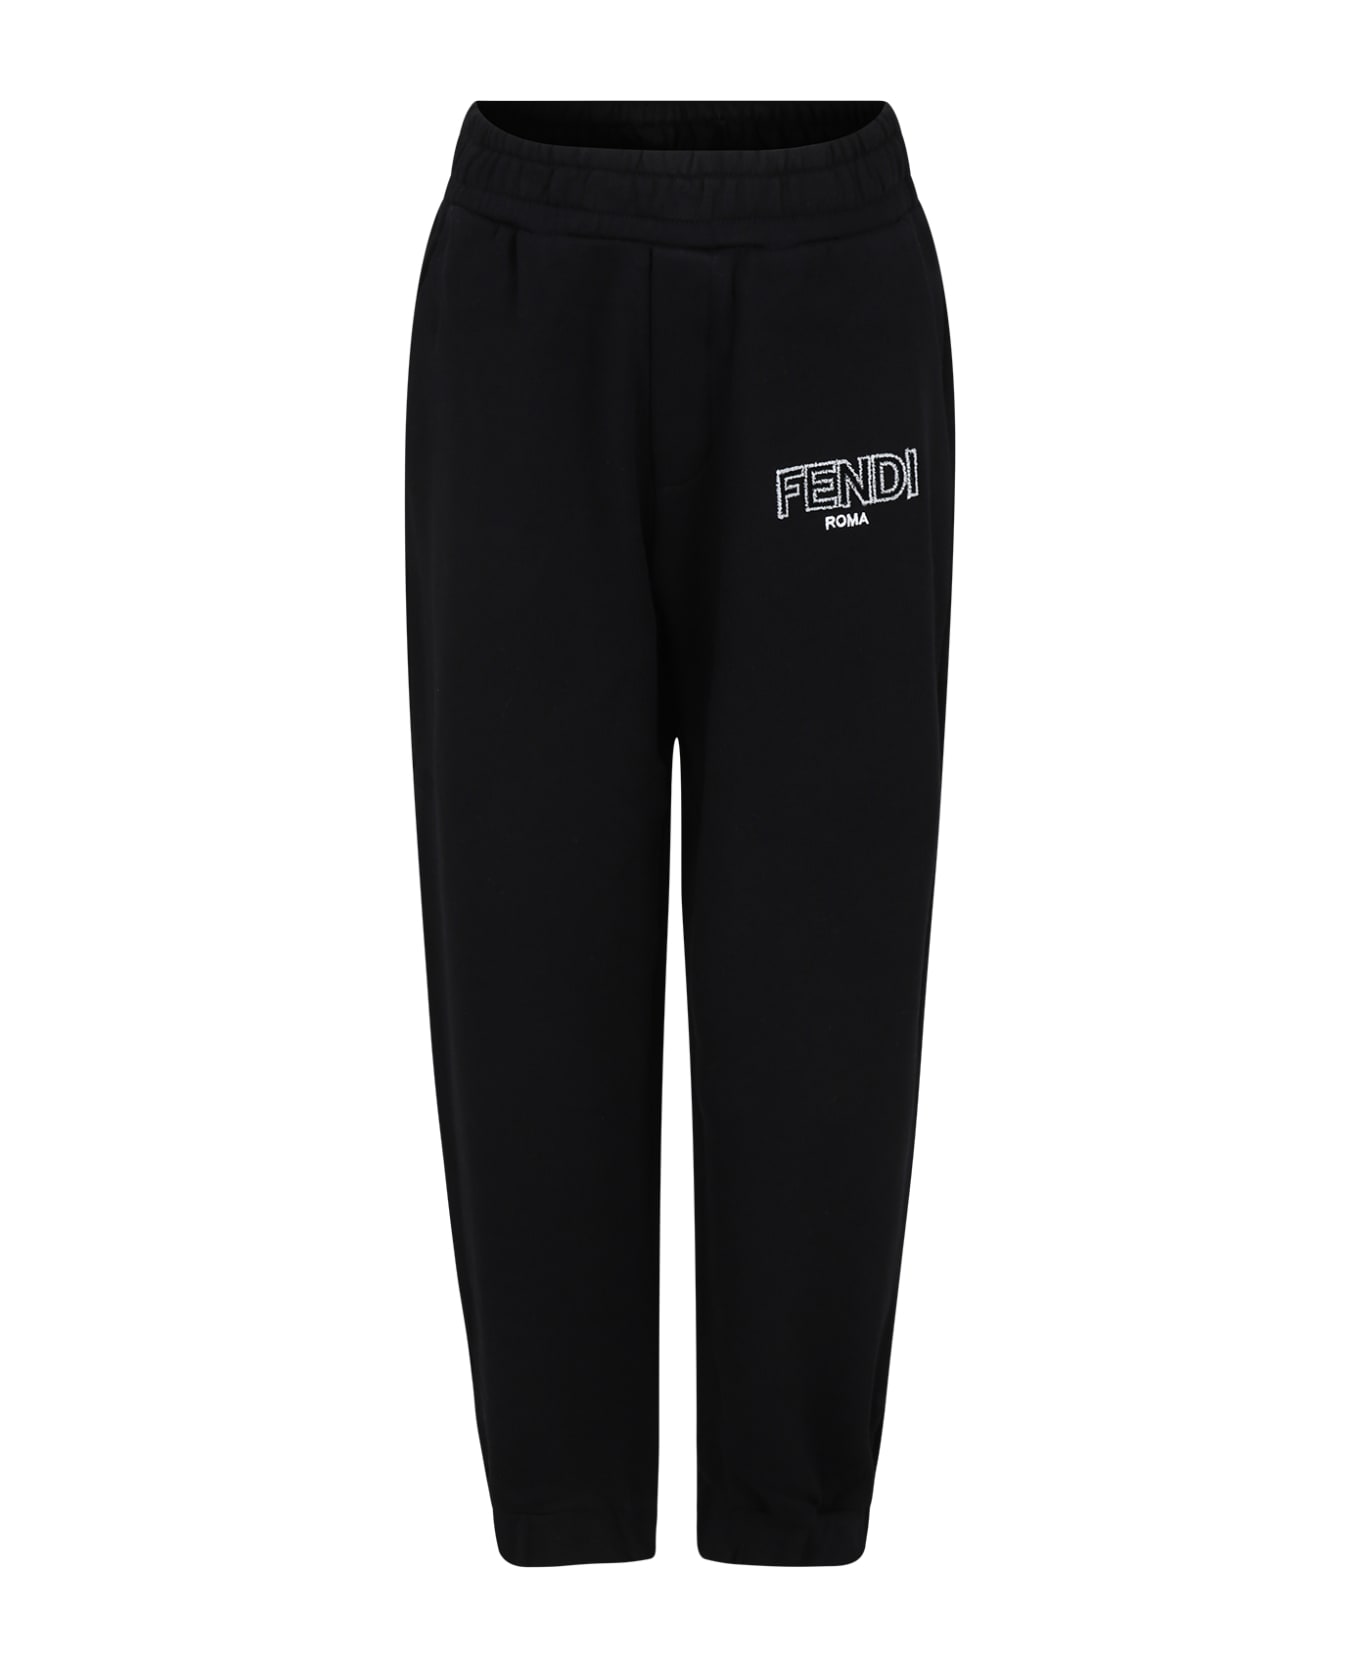 Fendi Black Trousers For Kids With Fendi Logo - Black